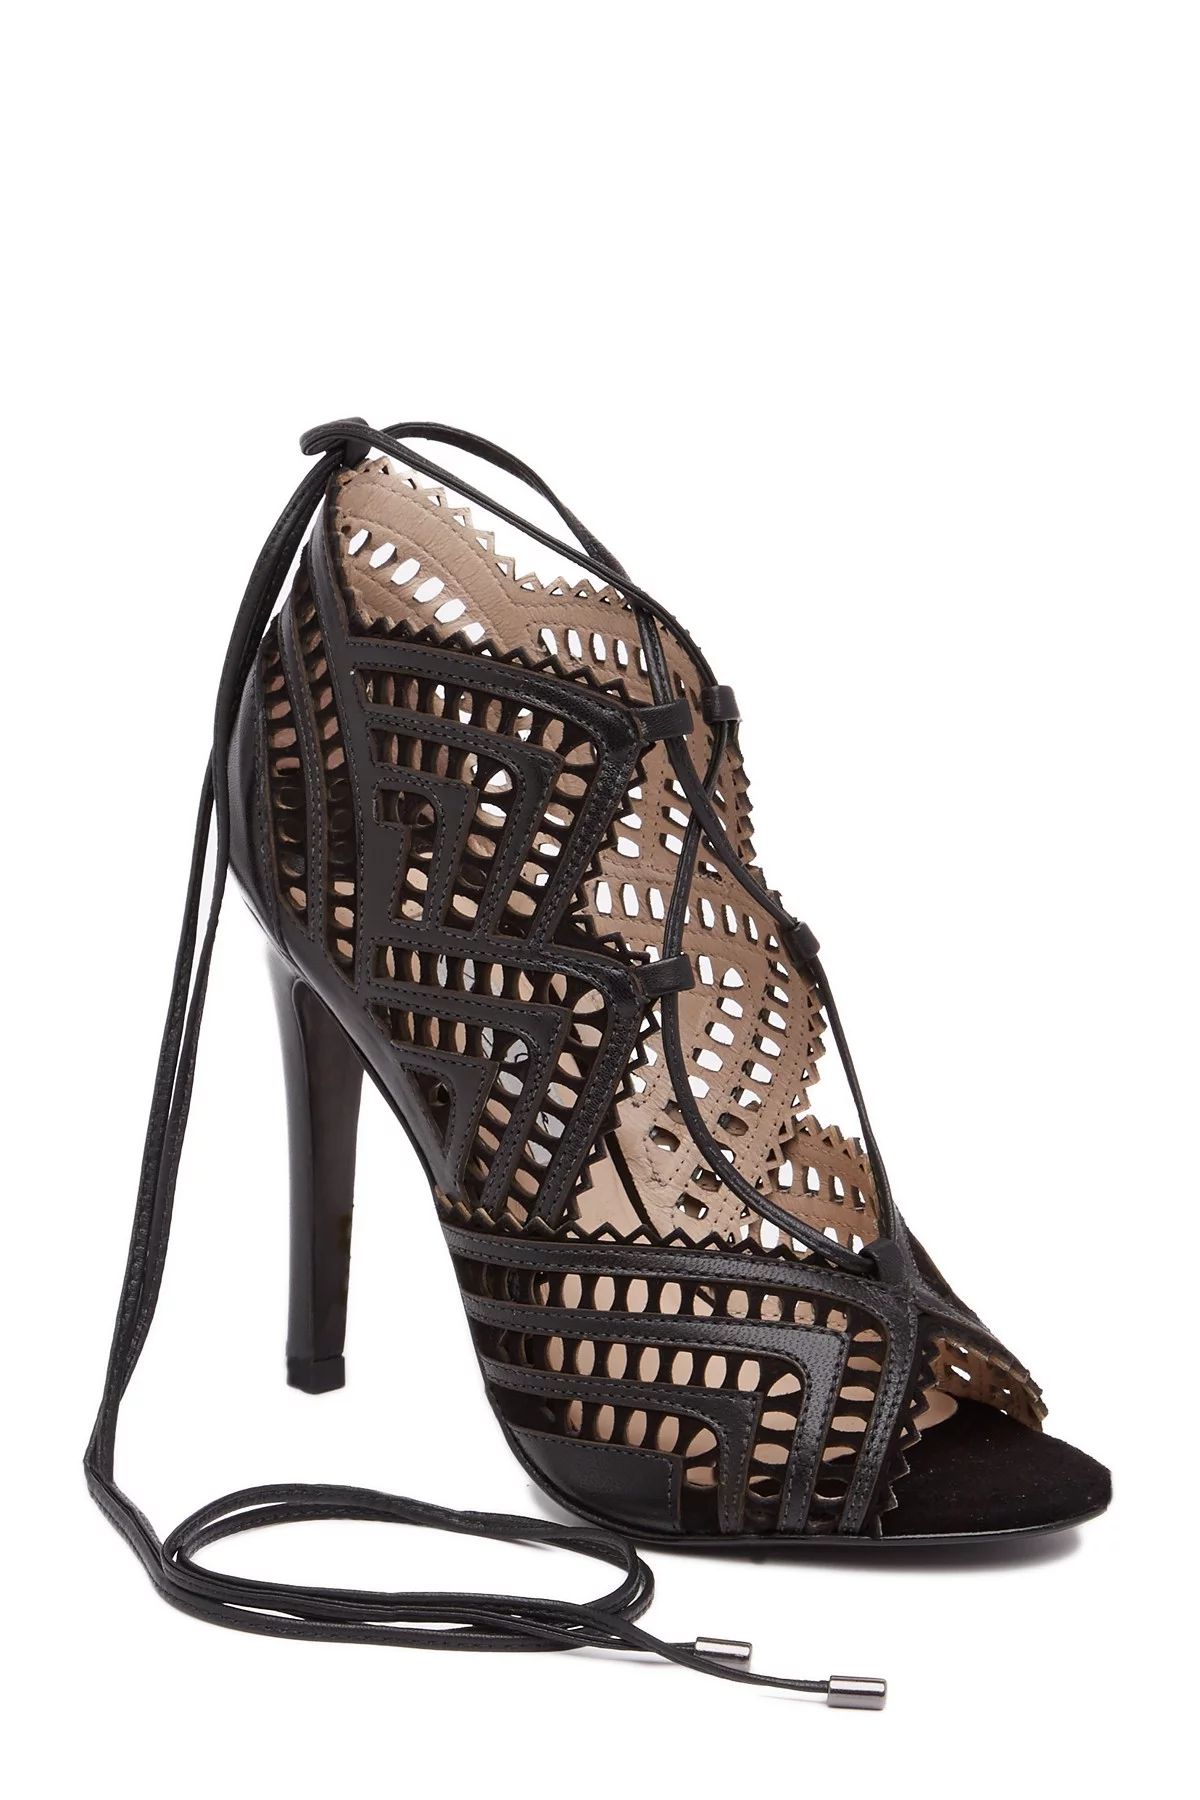 Ashley Cole Lacey Black High Heel Lasercut Lace-Up Stiletto Heel Sandal Pumps (7.5) | Walmart (US)